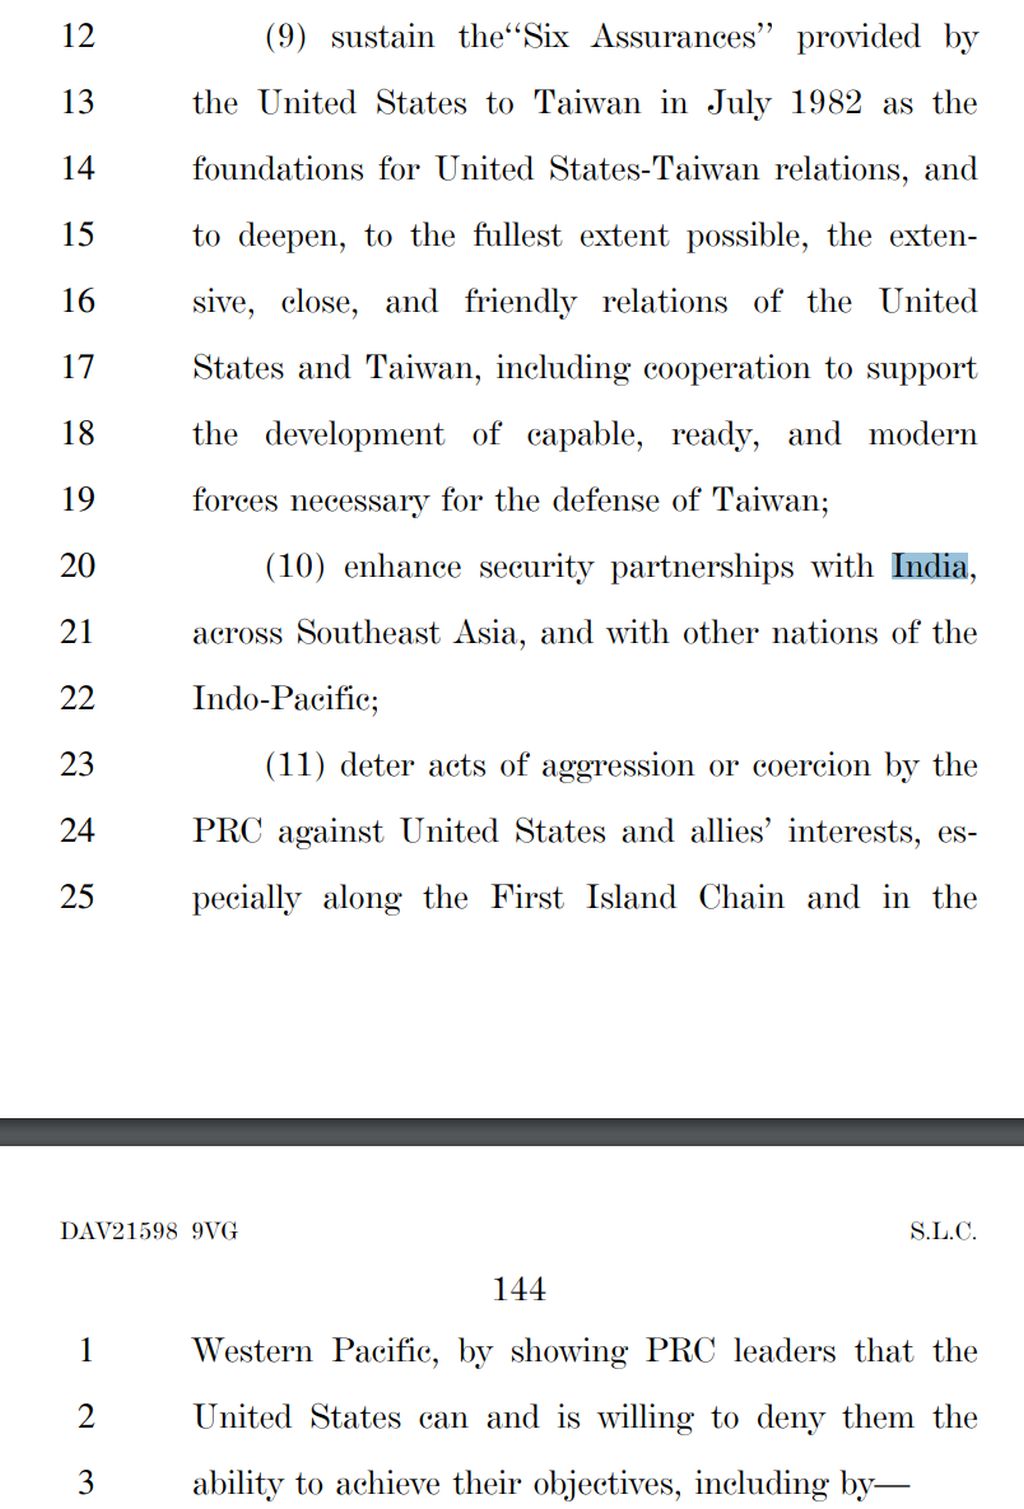 Senate Bill 2.jpg